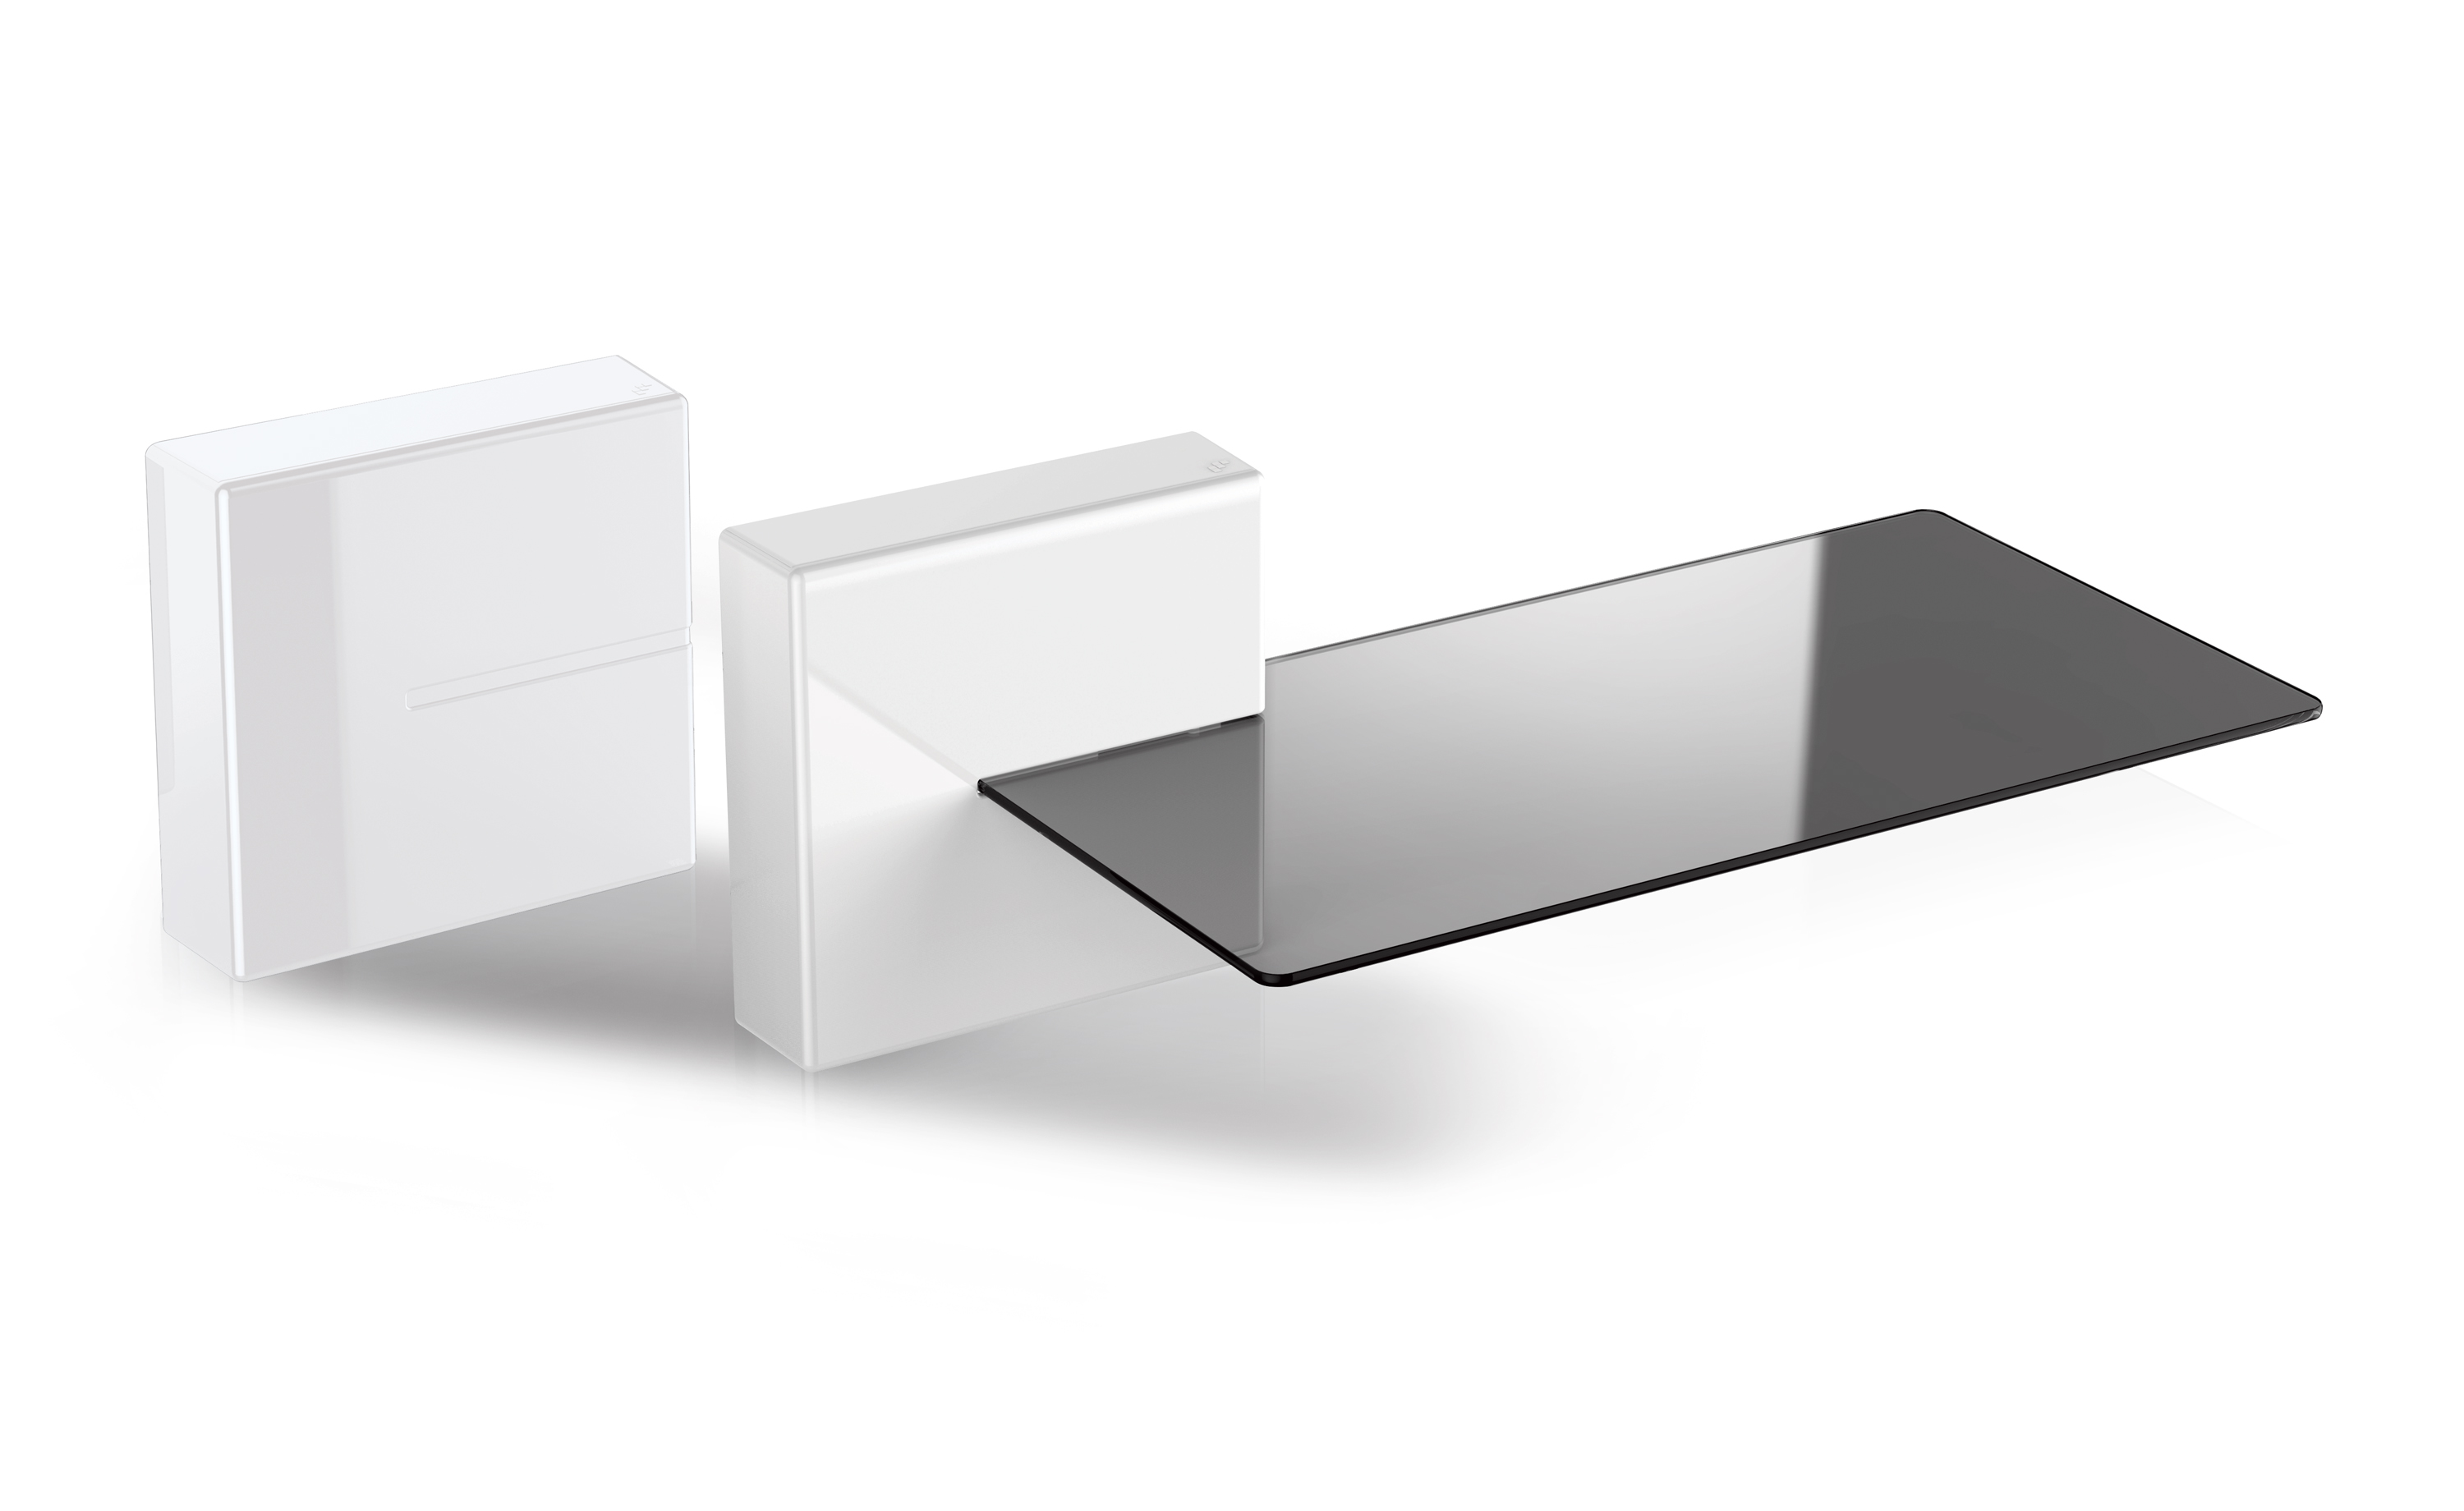 Ghost cube shelf, modular cable cover system avec verre shelf, blanc